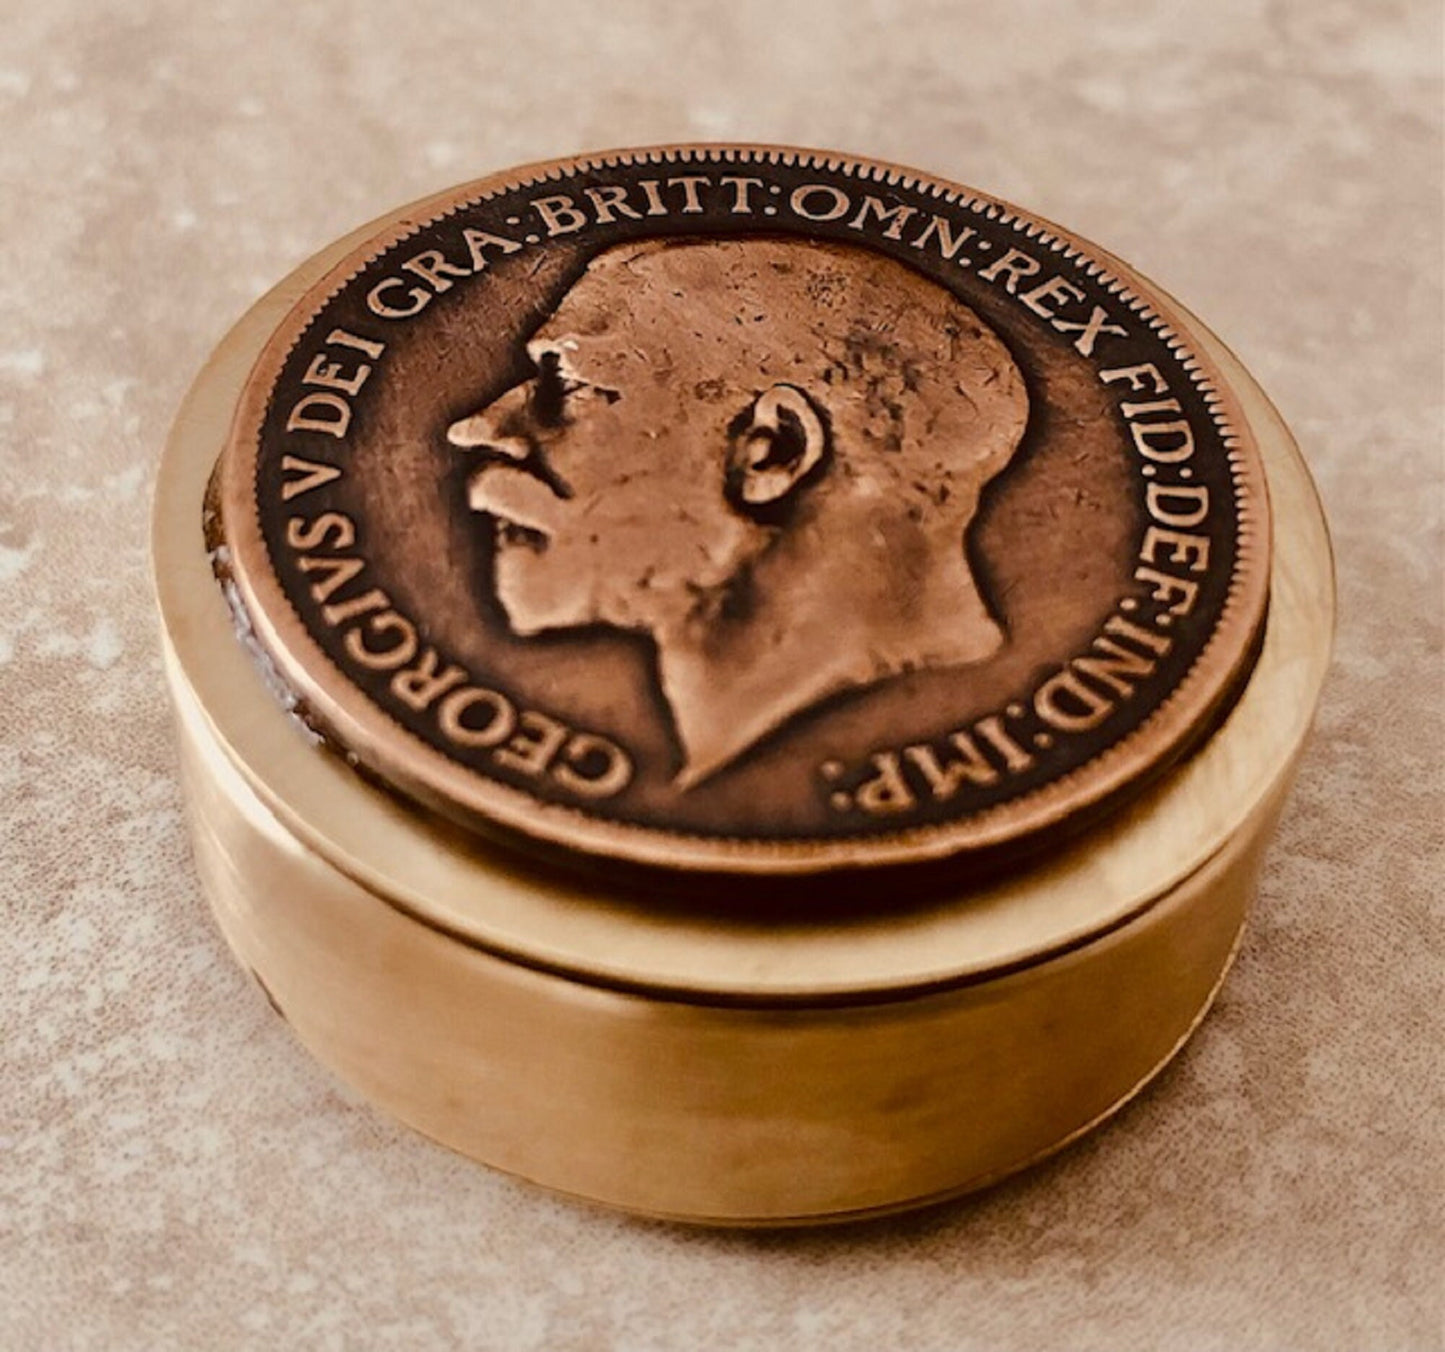 British Coin Pillbox Britain Large Penny Vitamins, Vintage Antique Stash Snuff Box, Box, Keepsake, Men's Gift, Jewelry World Coin Collector